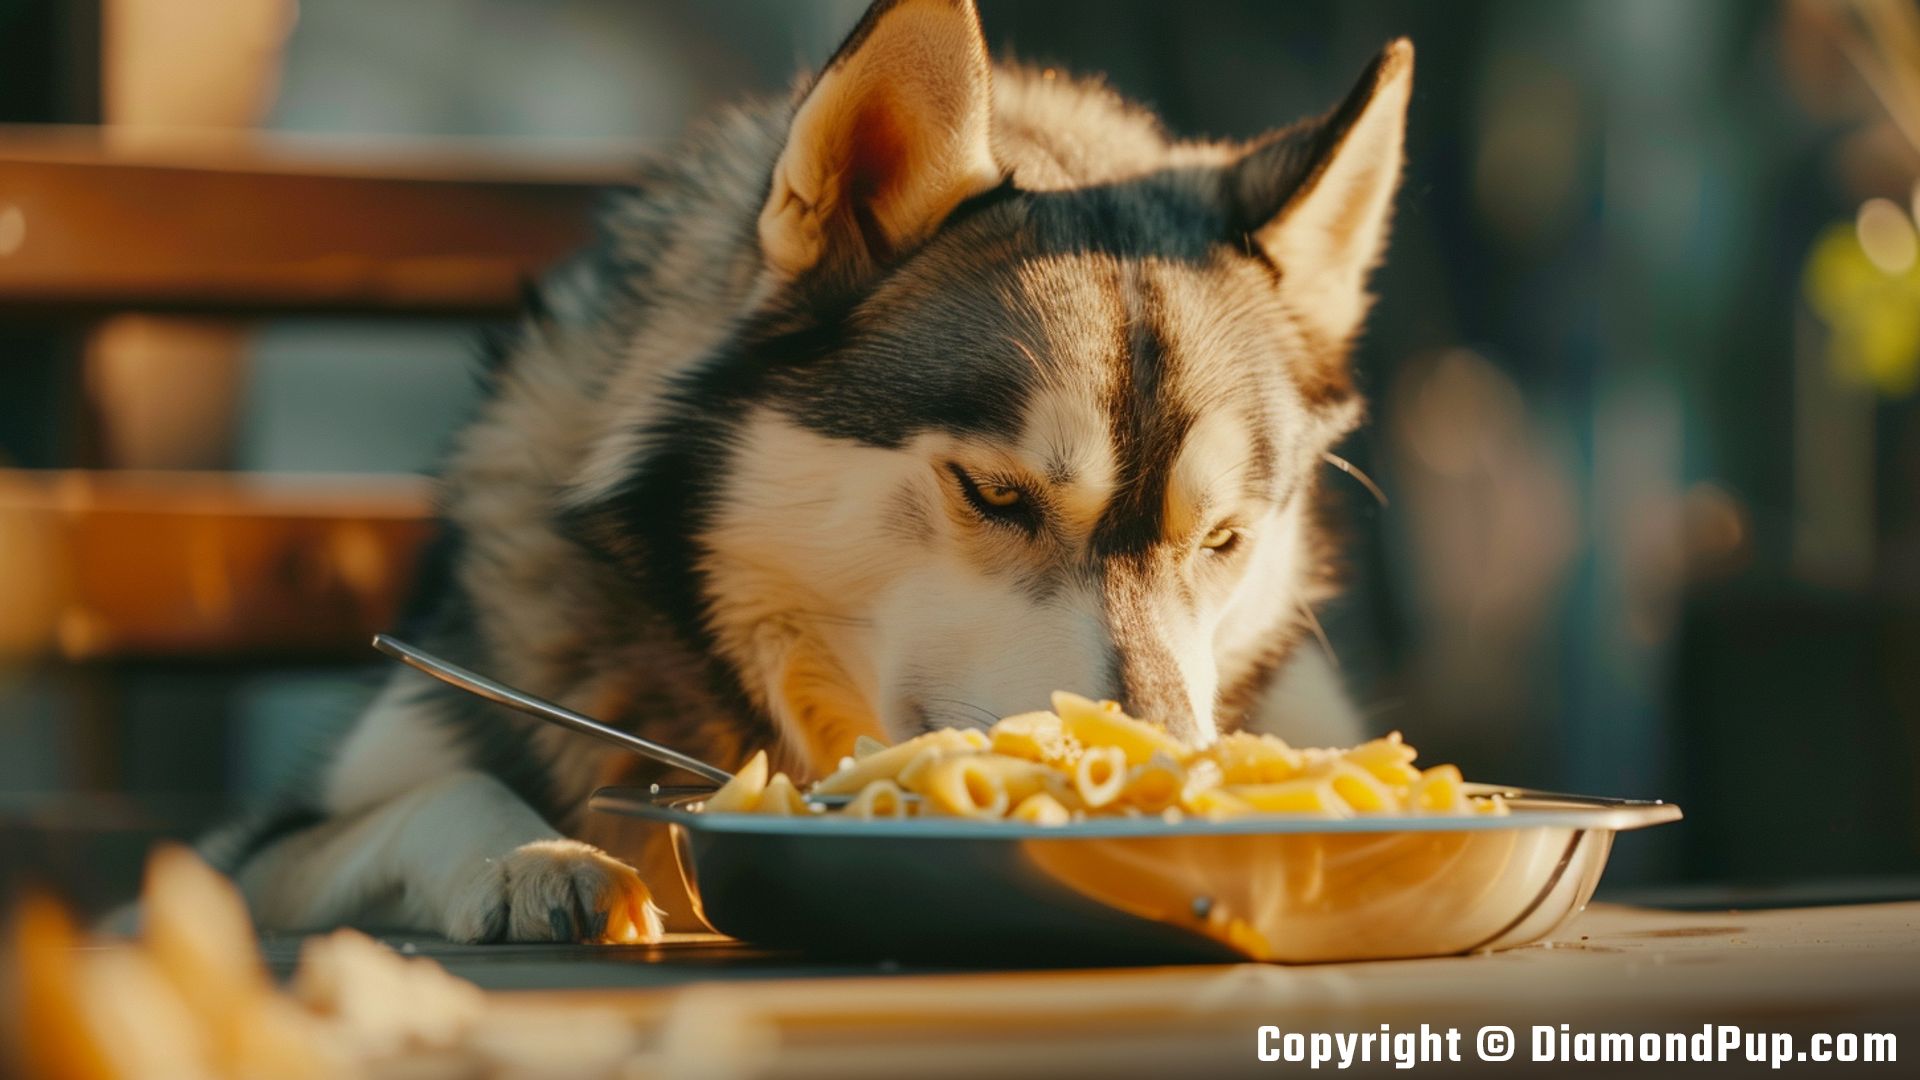 Photo of a Playful Husky Snacking on Pasta